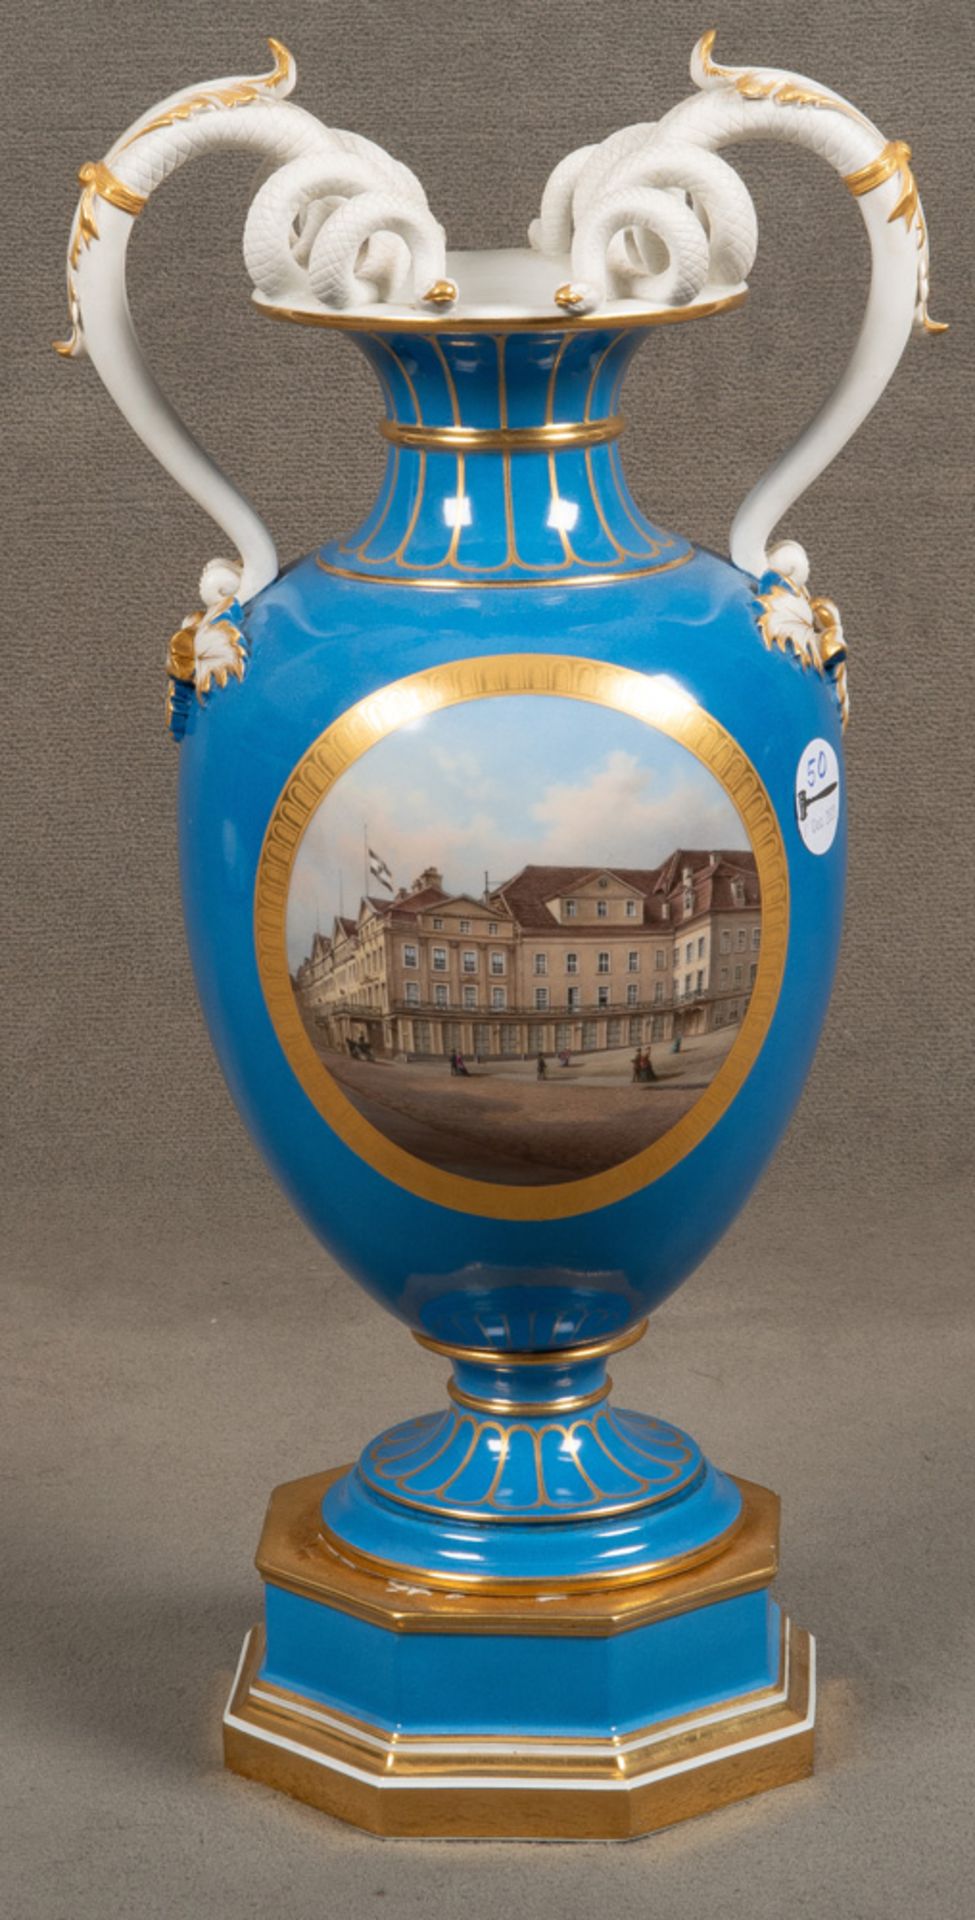 Urbino-Vase auf Sockel. Berlin 19. Jh. Porzellan, mit türkisblauem Fond, Goldrändern und